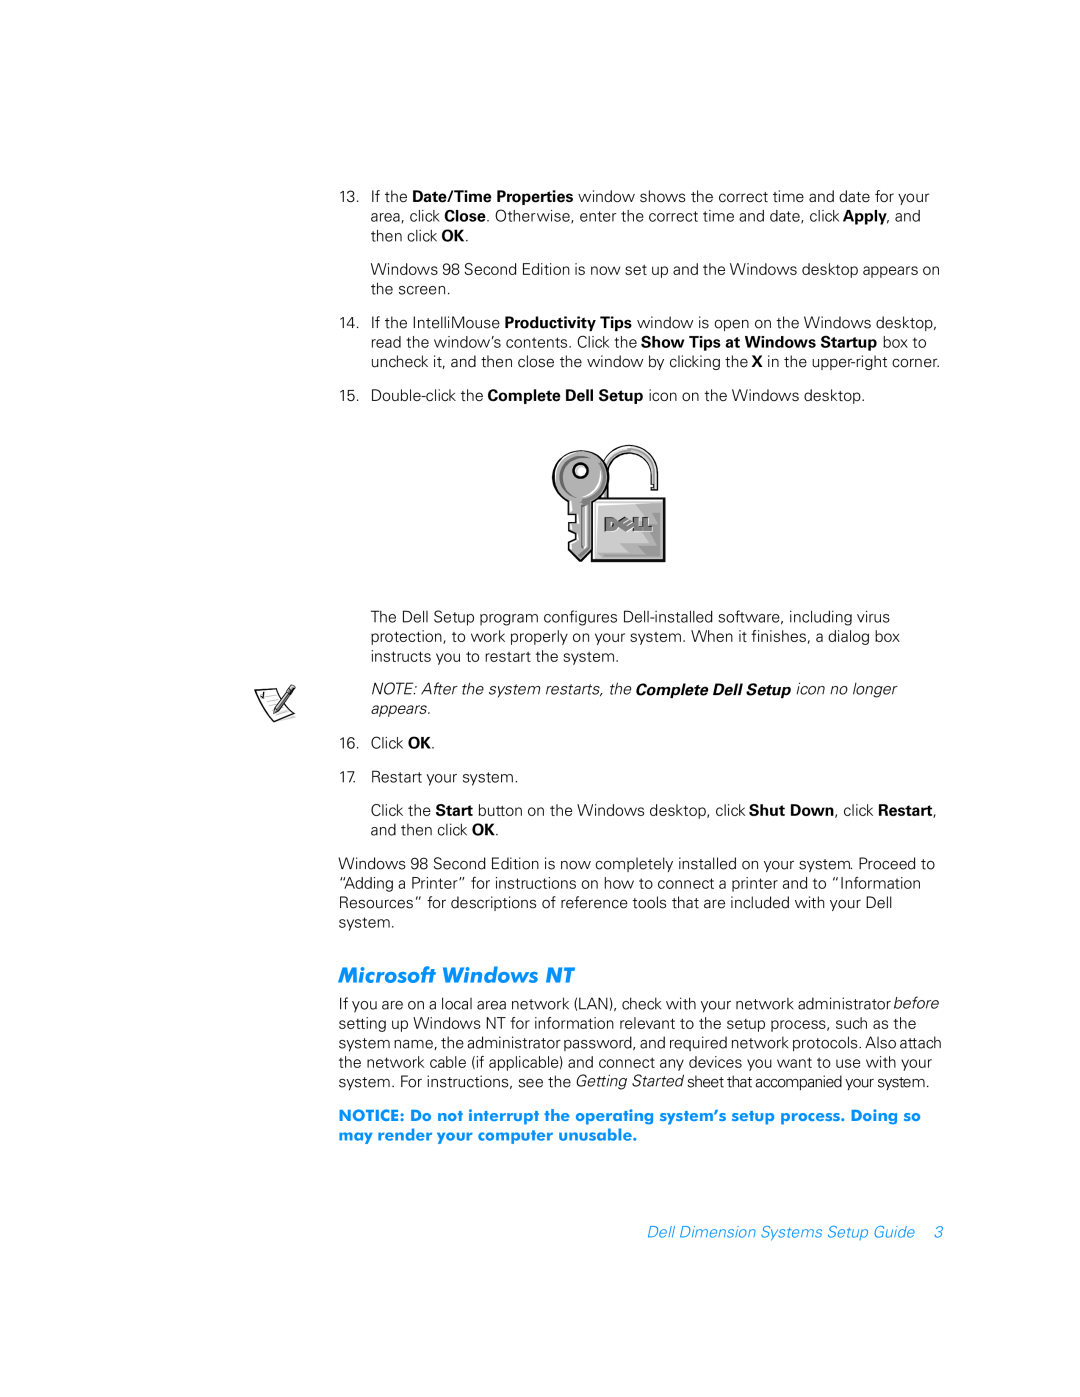 Dell Lxxxc manual 0LFURVRIWLQGRZV17, Dell Dimension Systems Setup Guide 